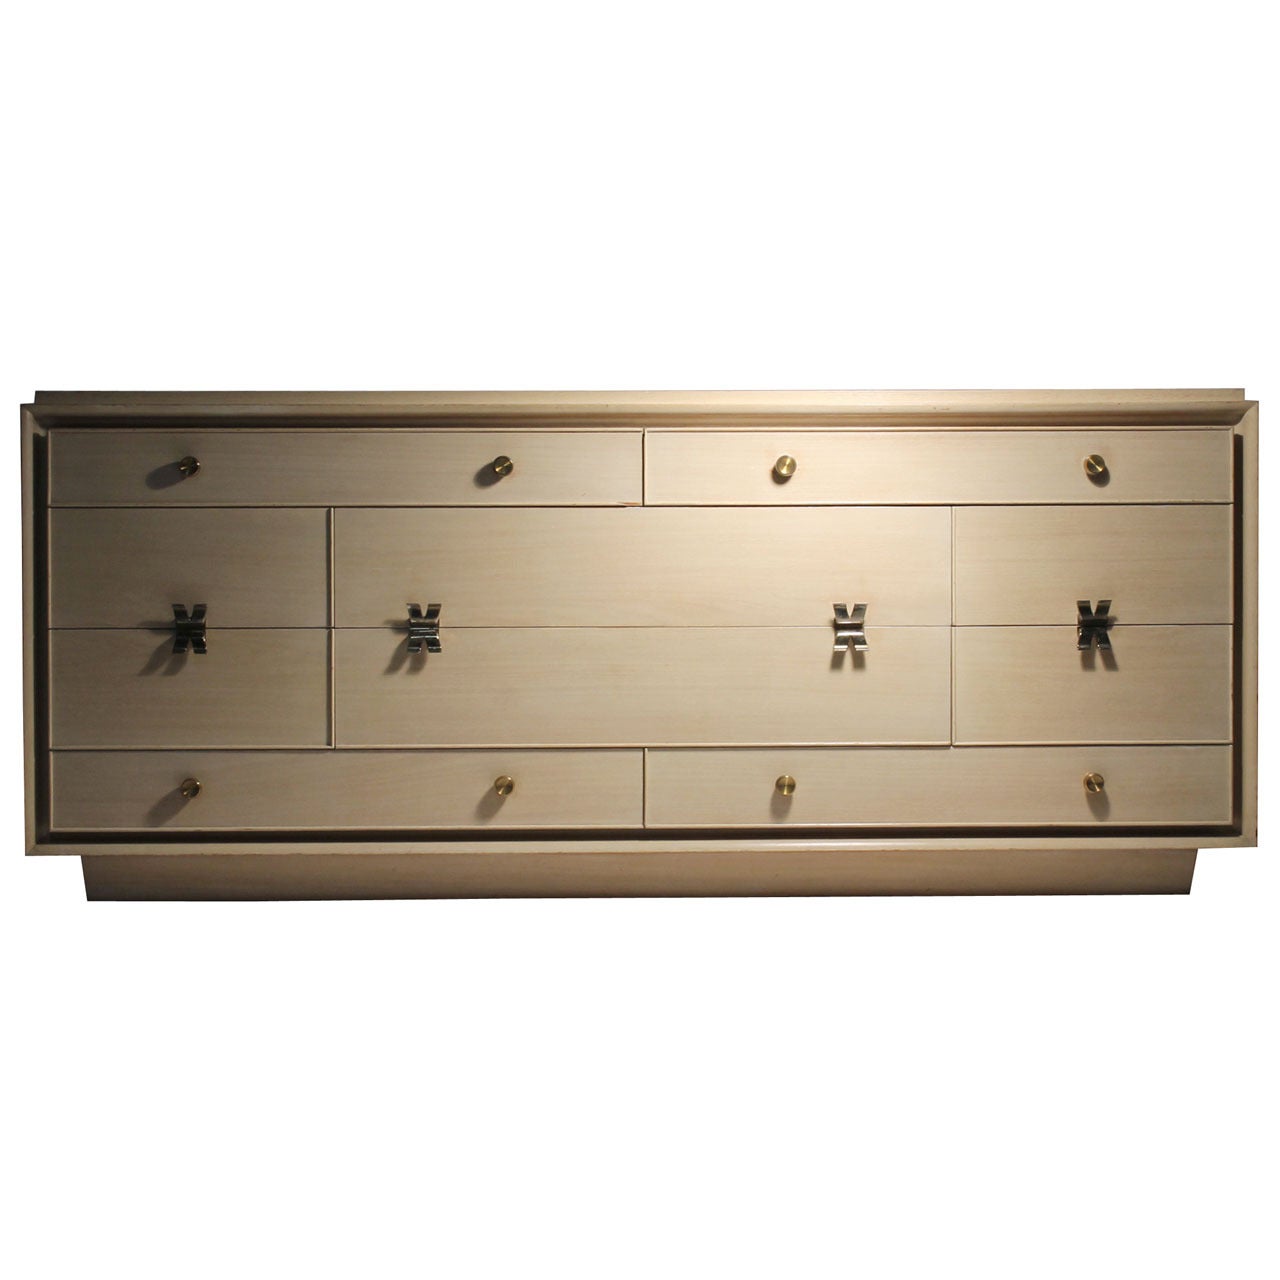 Rare Paul Frankl Designed Sideboard or Dresser for Johnson (PAIR available)